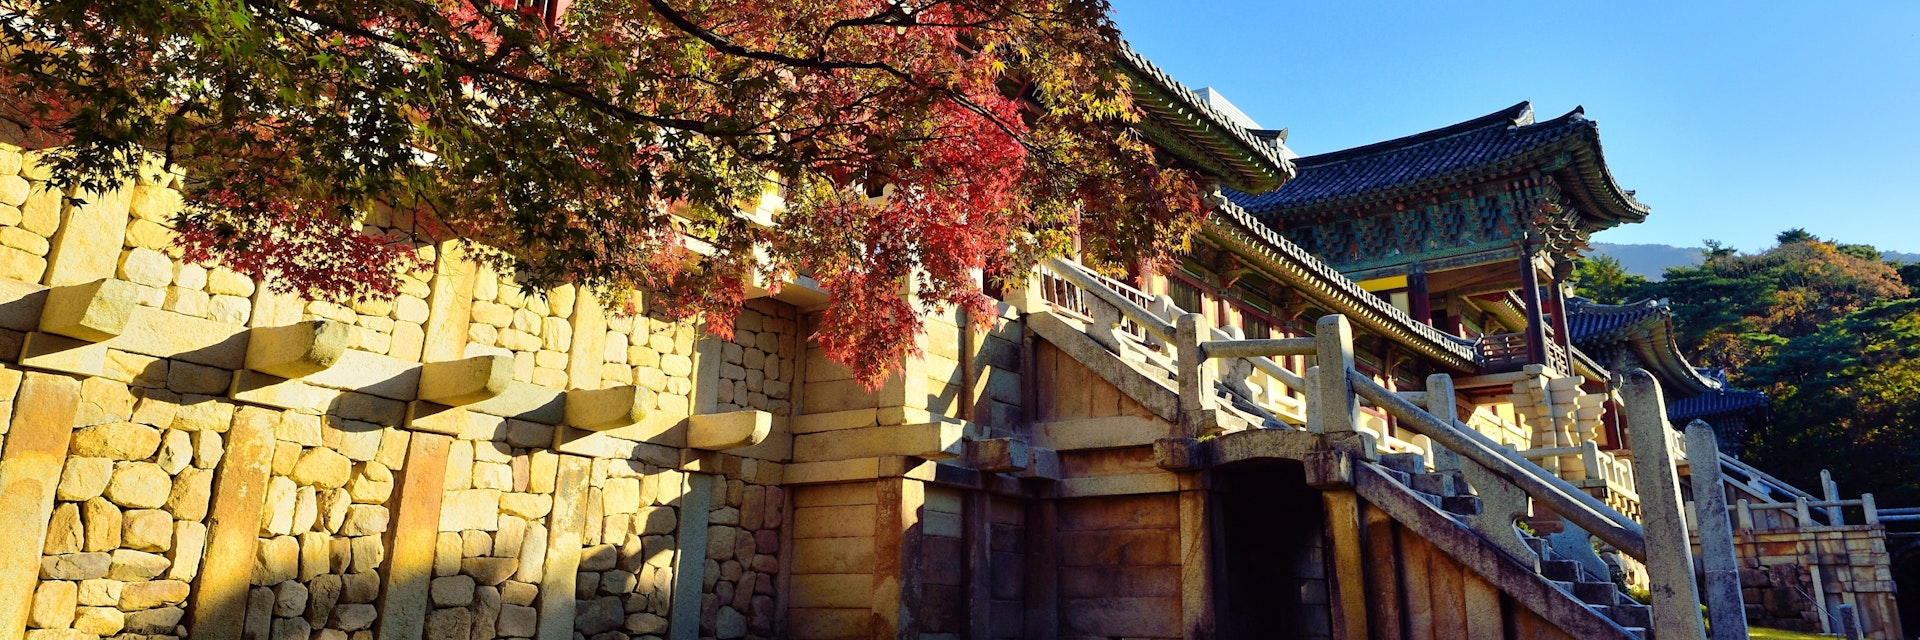 500px Photo ID: 89384605 - UNESCO World Heritage Site, Bulguksa Temple in Autumn..(Jinheon-dong, Gyeongju city, North Gyeongsang province, South Korea)